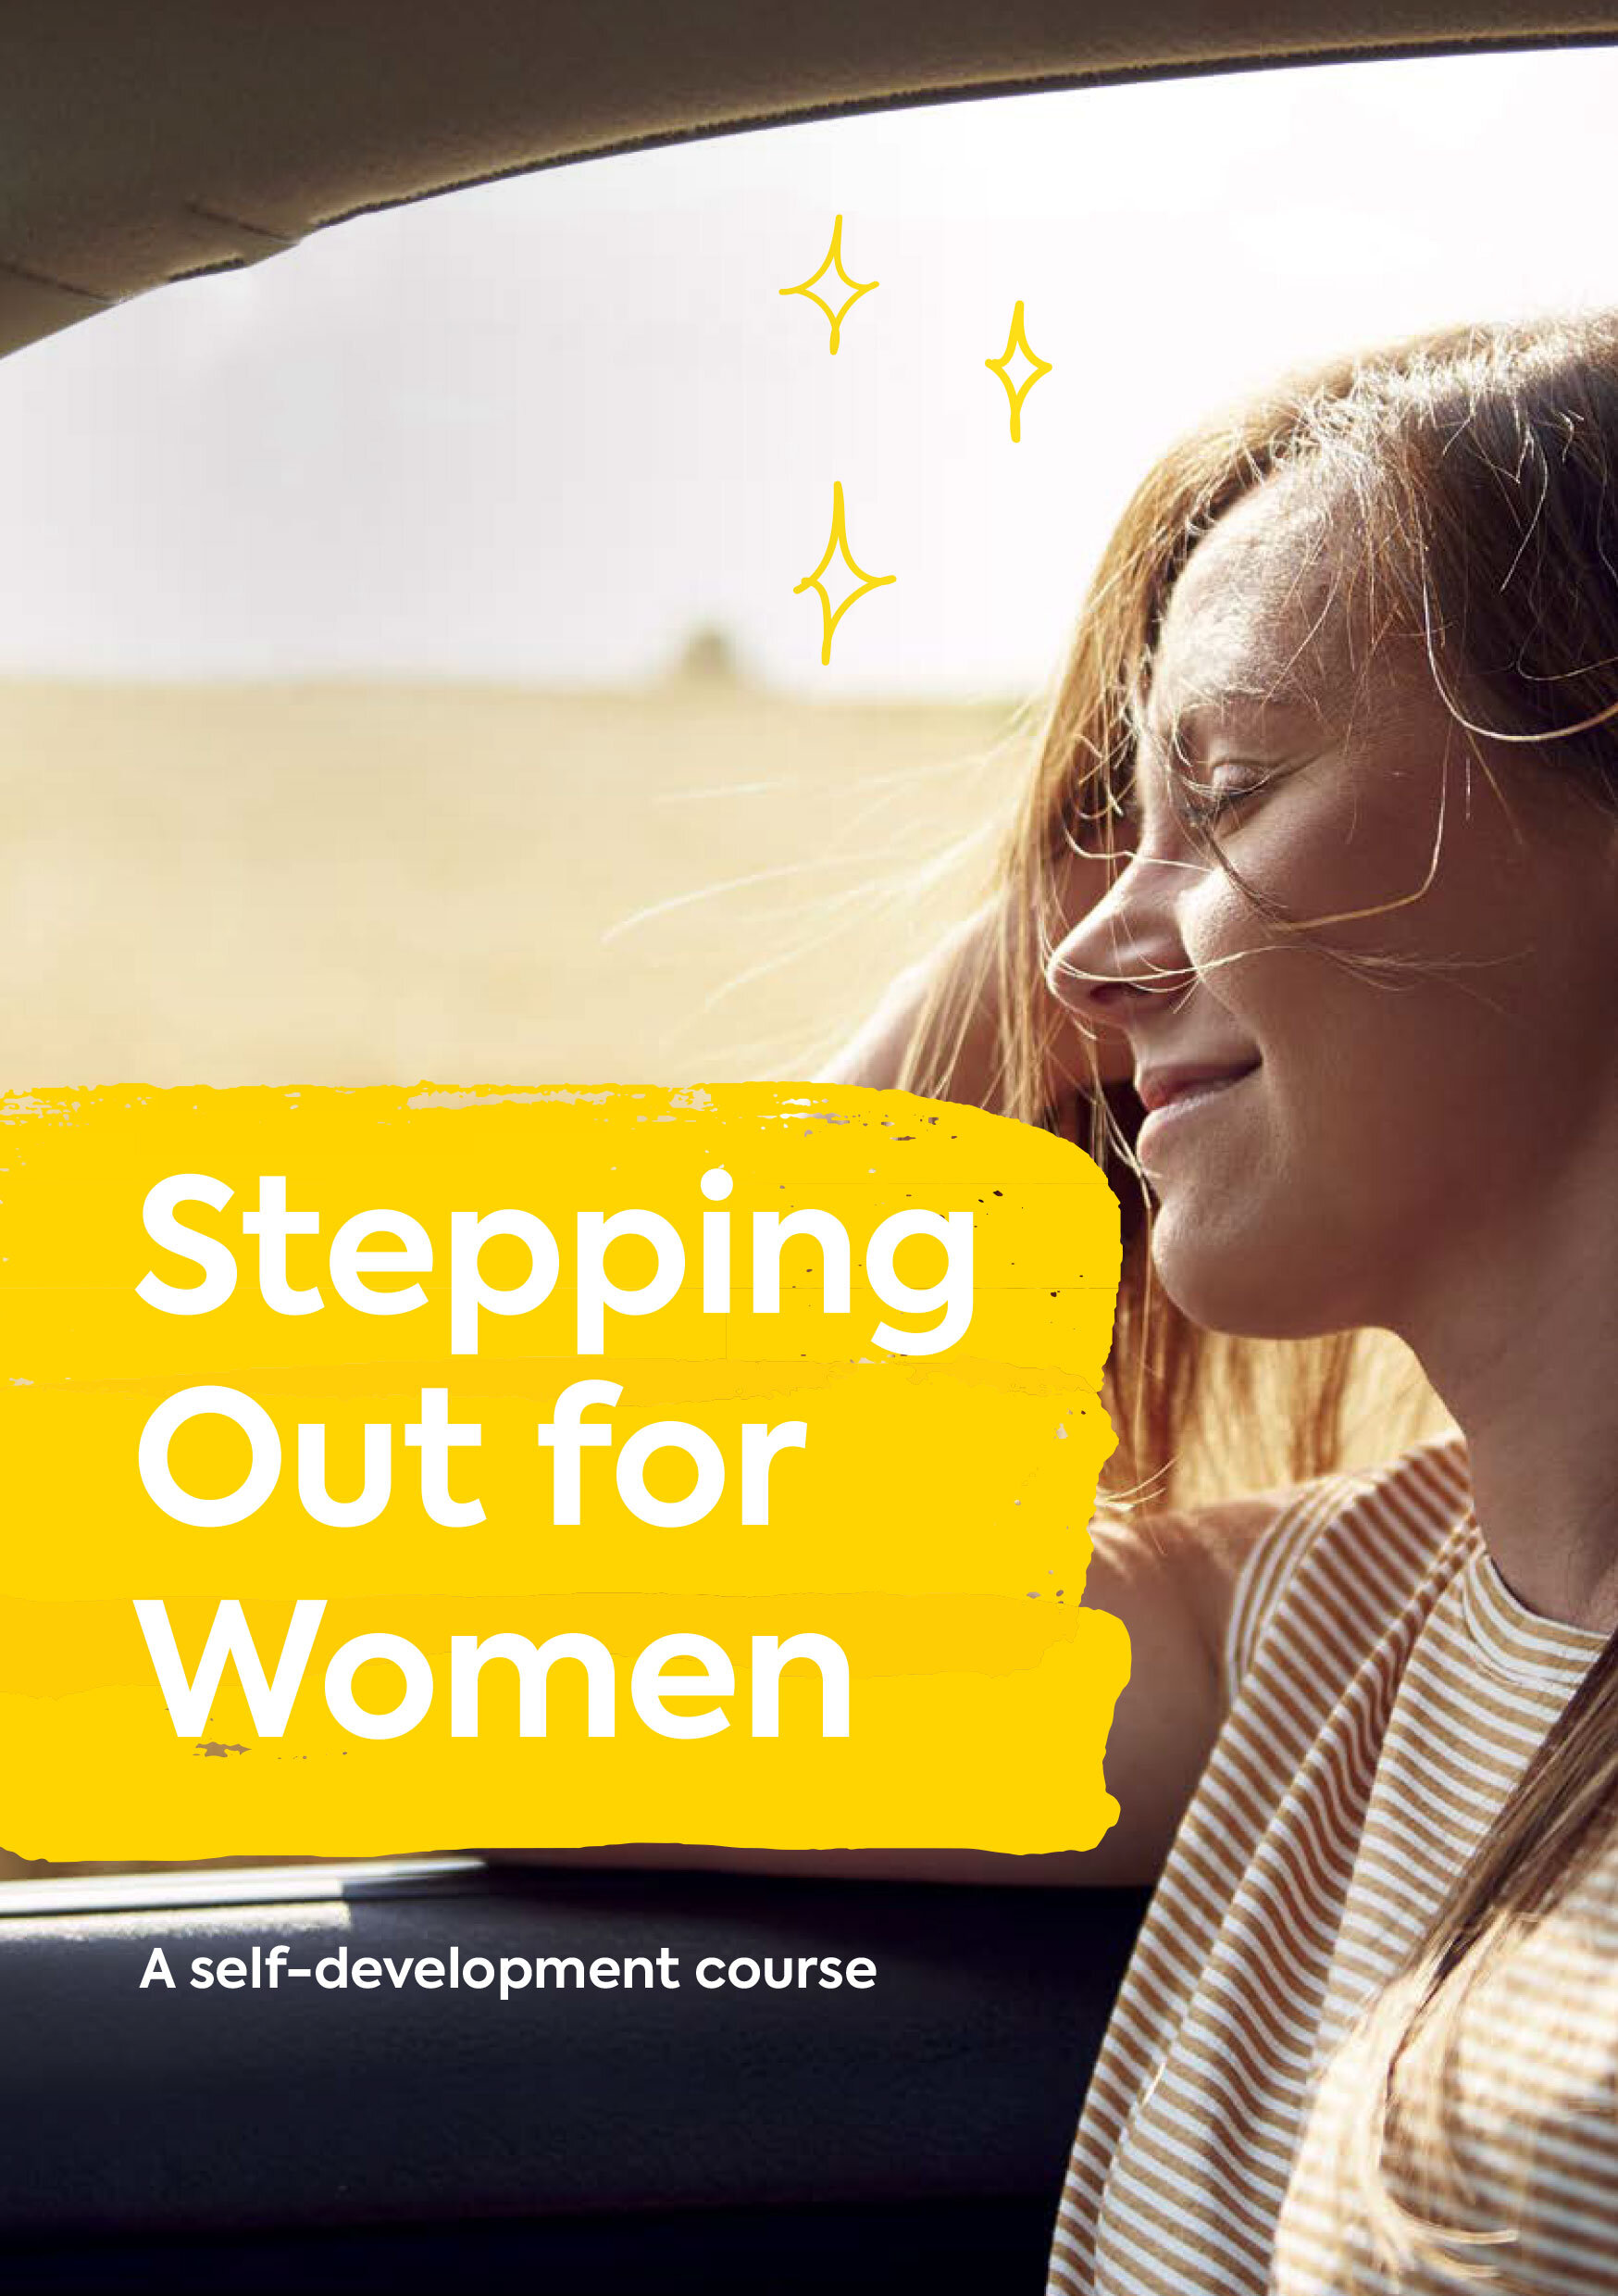 Stepping-Out-for-Women-brochure-web-YBR-1.jpg